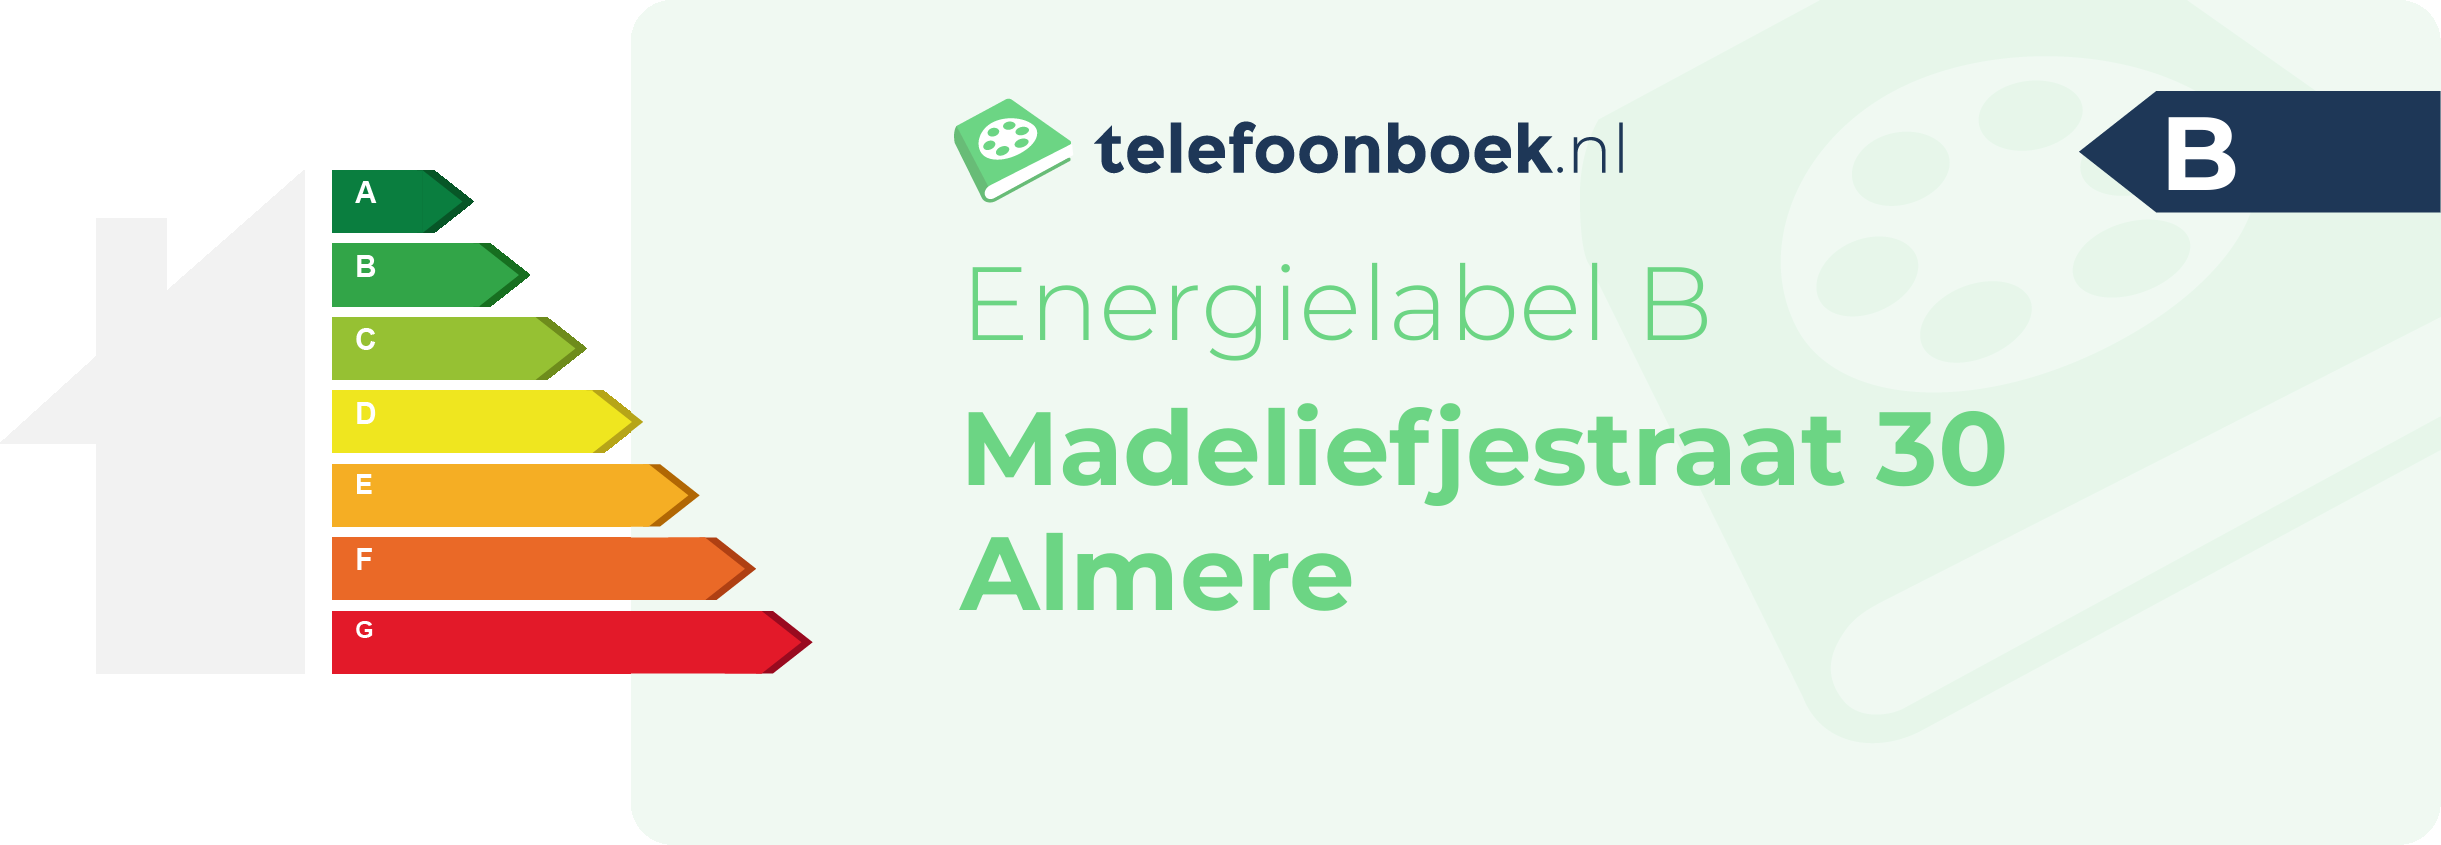 Energielabel Madeliefjestraat 30 Almere